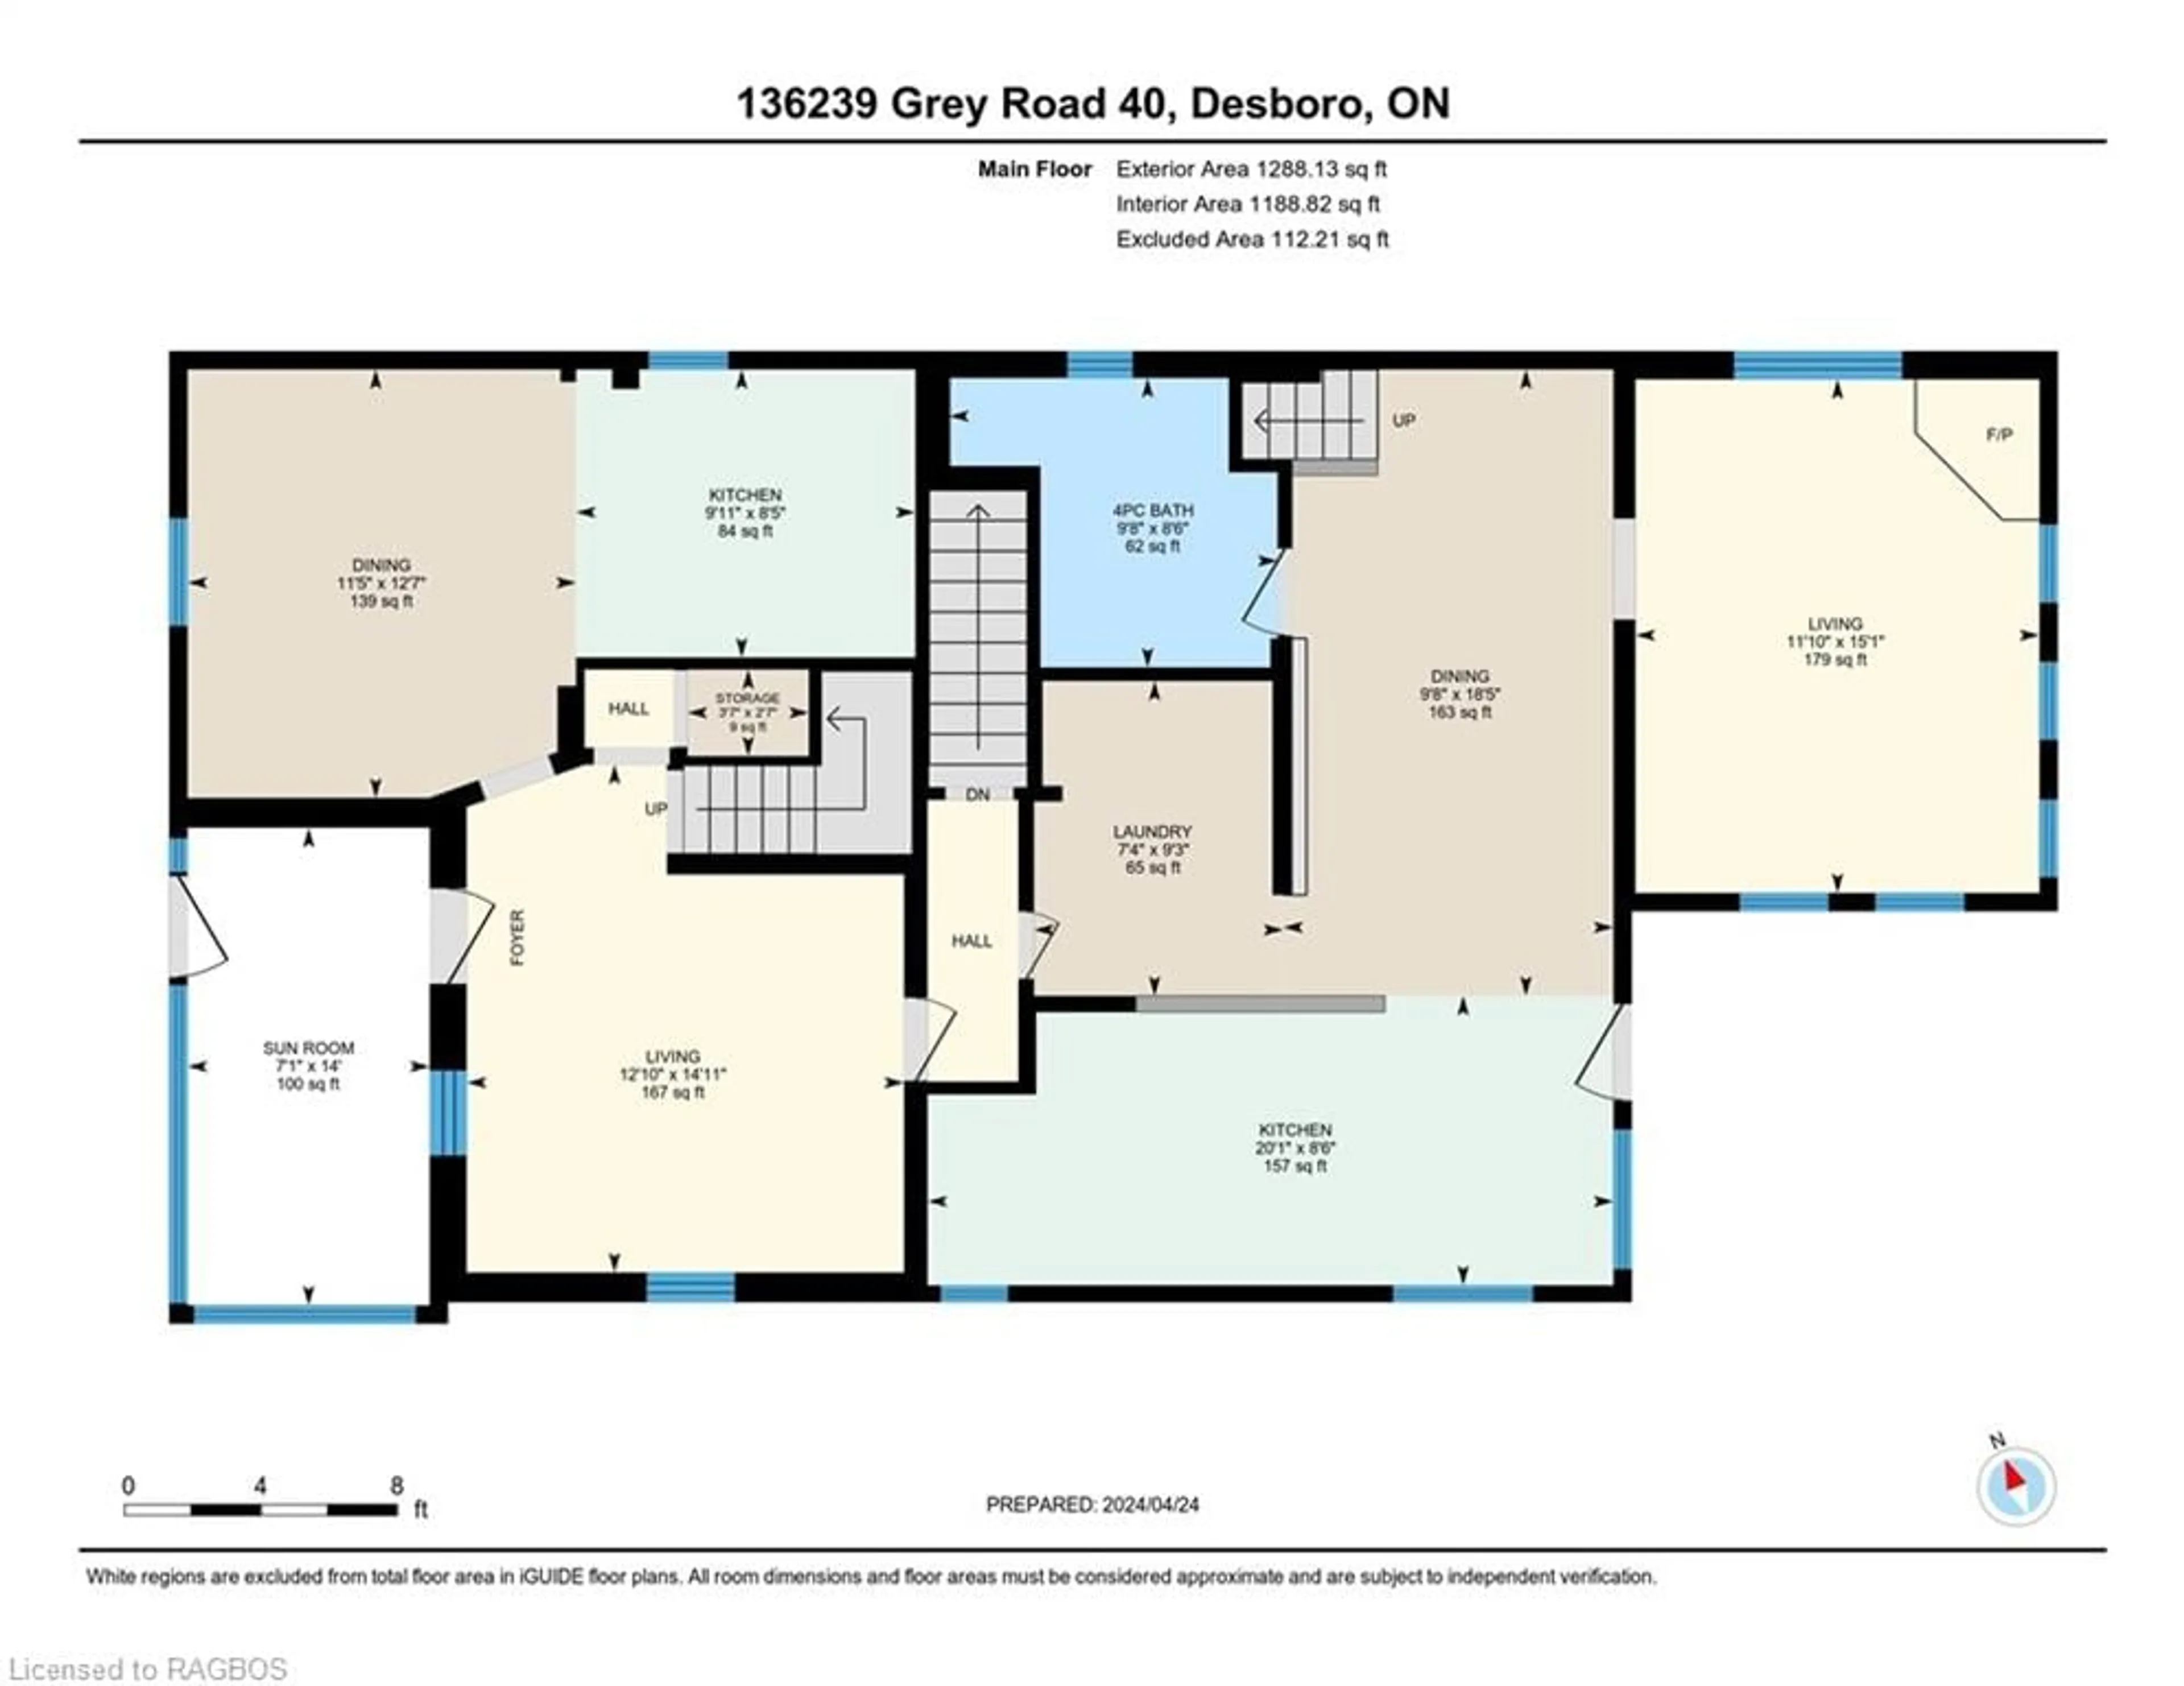 Floor plan for 136239 Grey Road 40, Desboro Ontario N0H 1G0